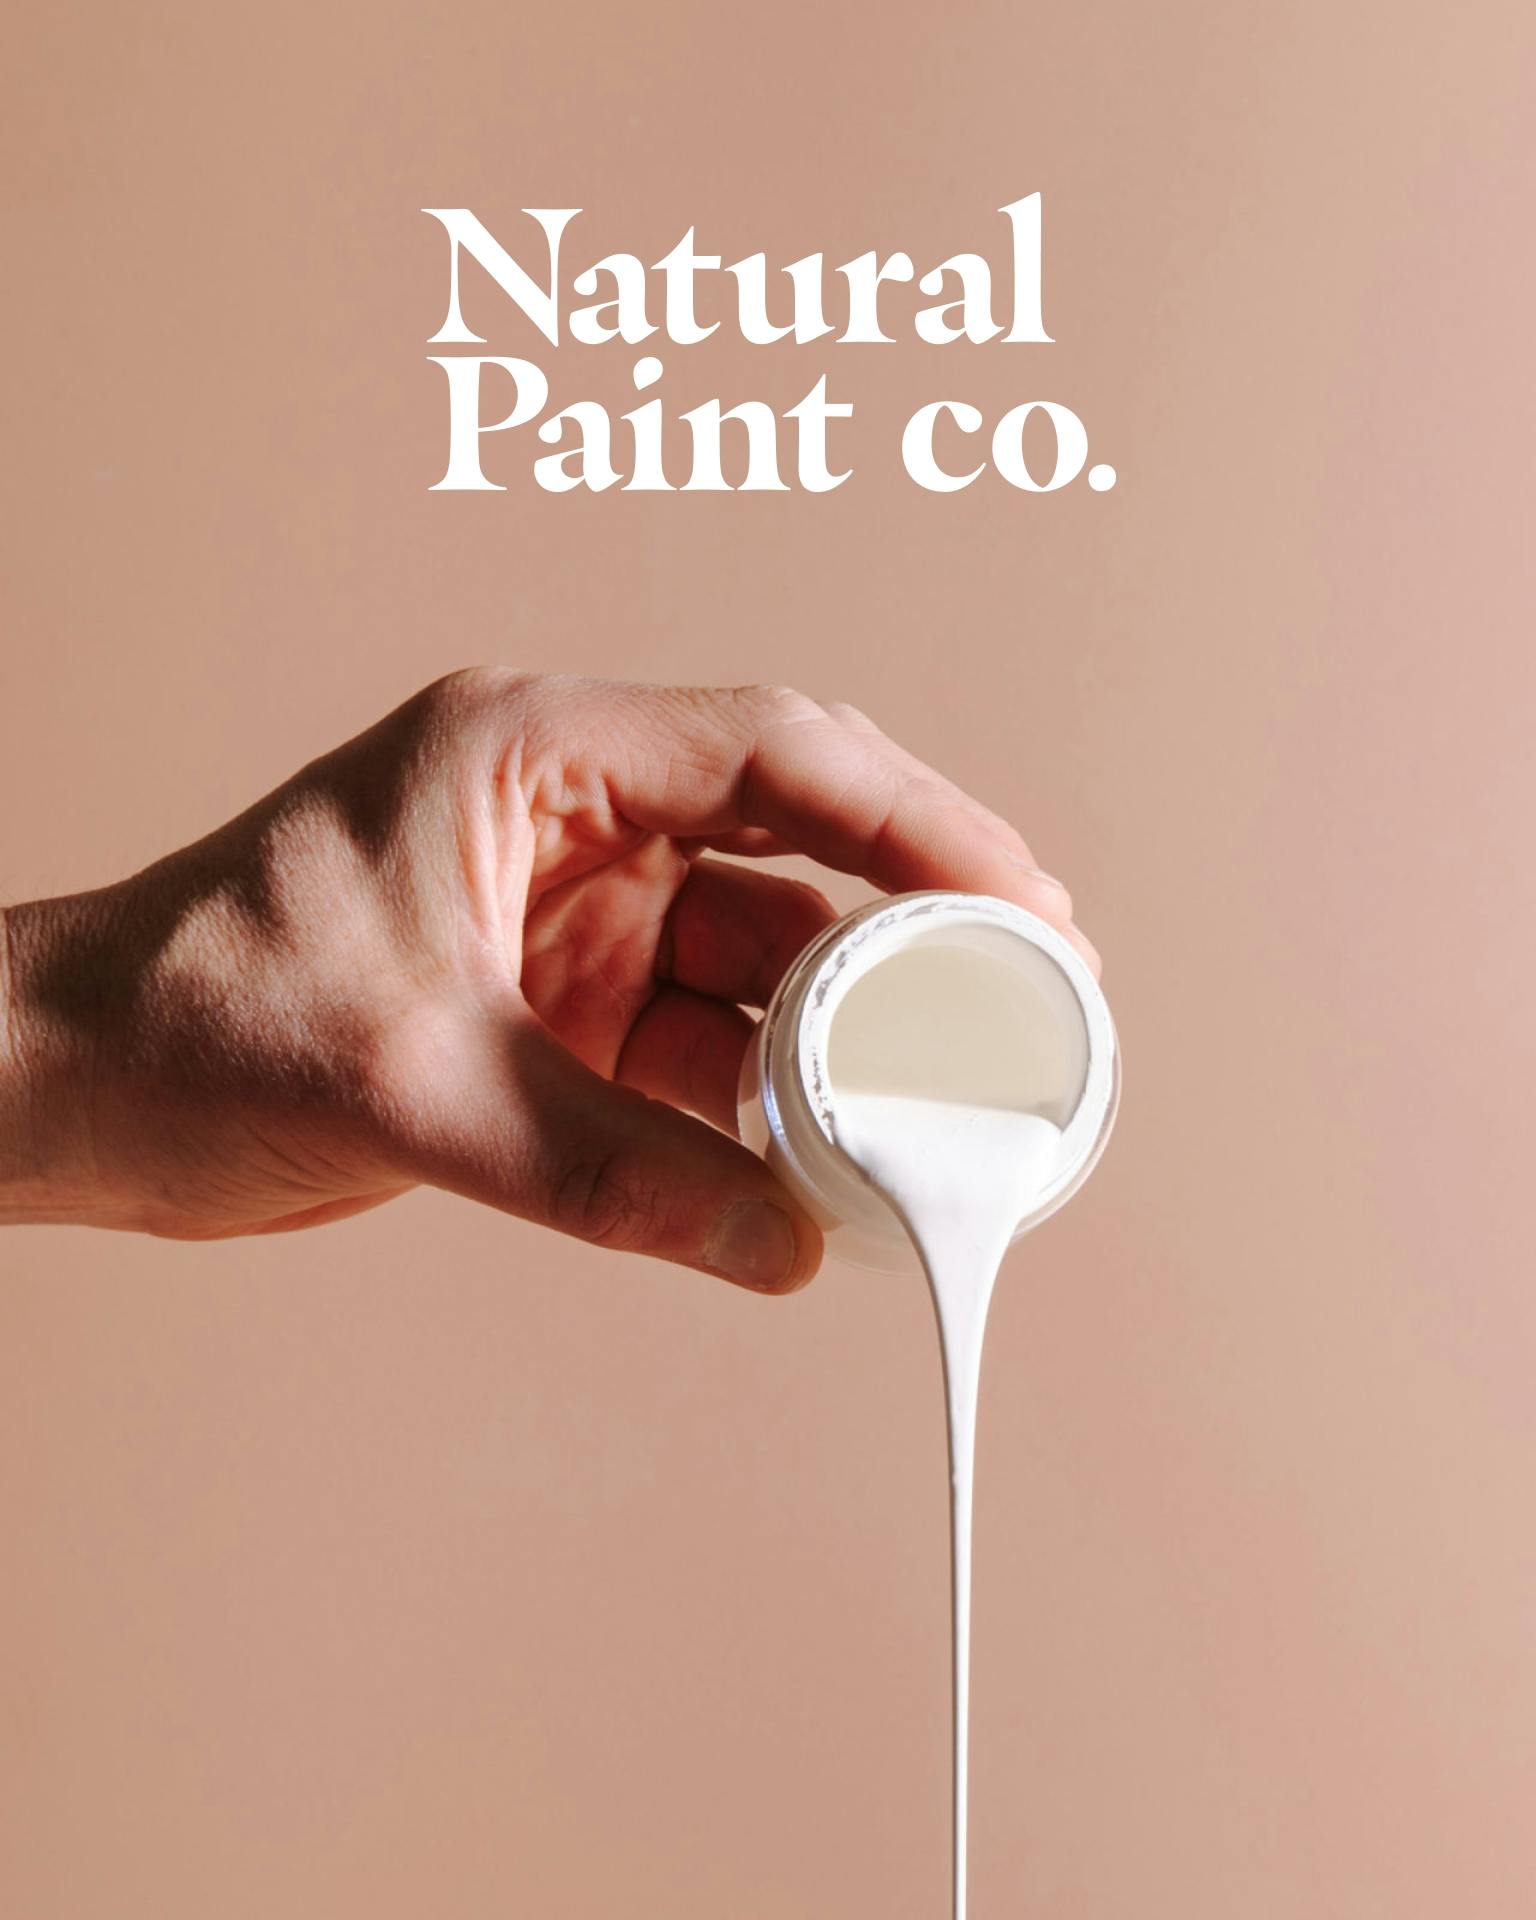 Natural Paint Co